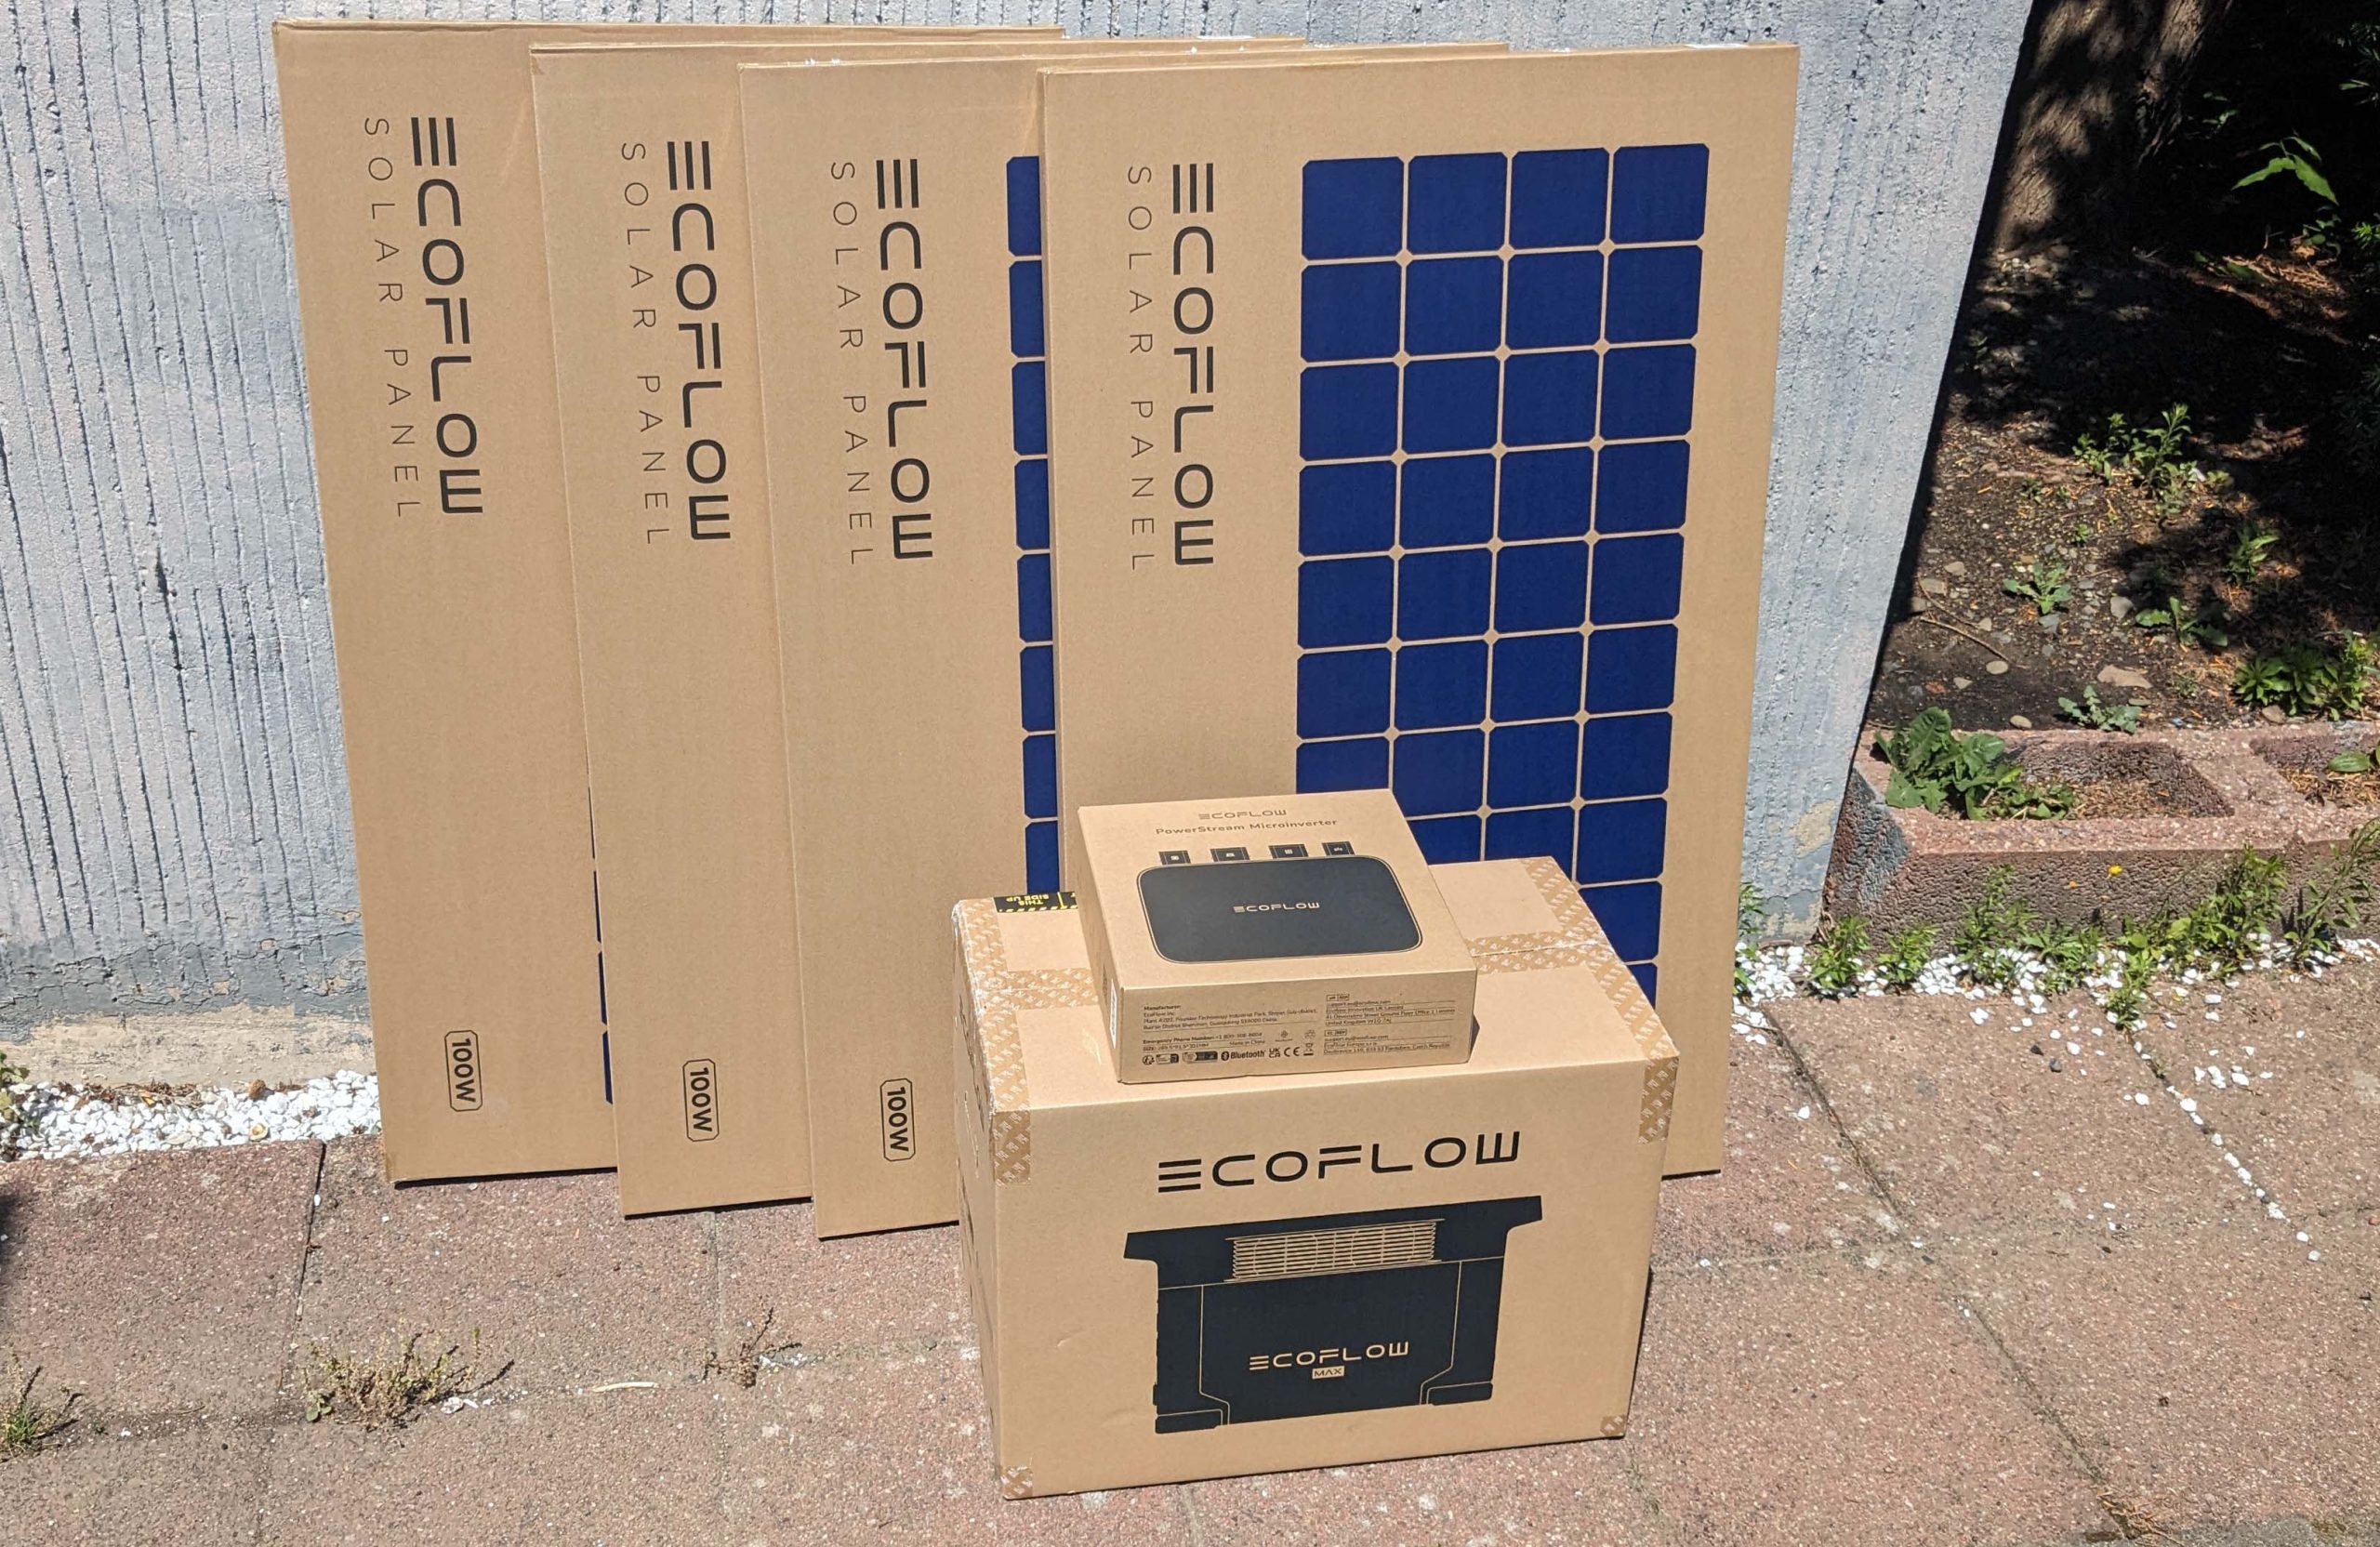 Ecoflow PowerStream Micro Inverter-EU 600W